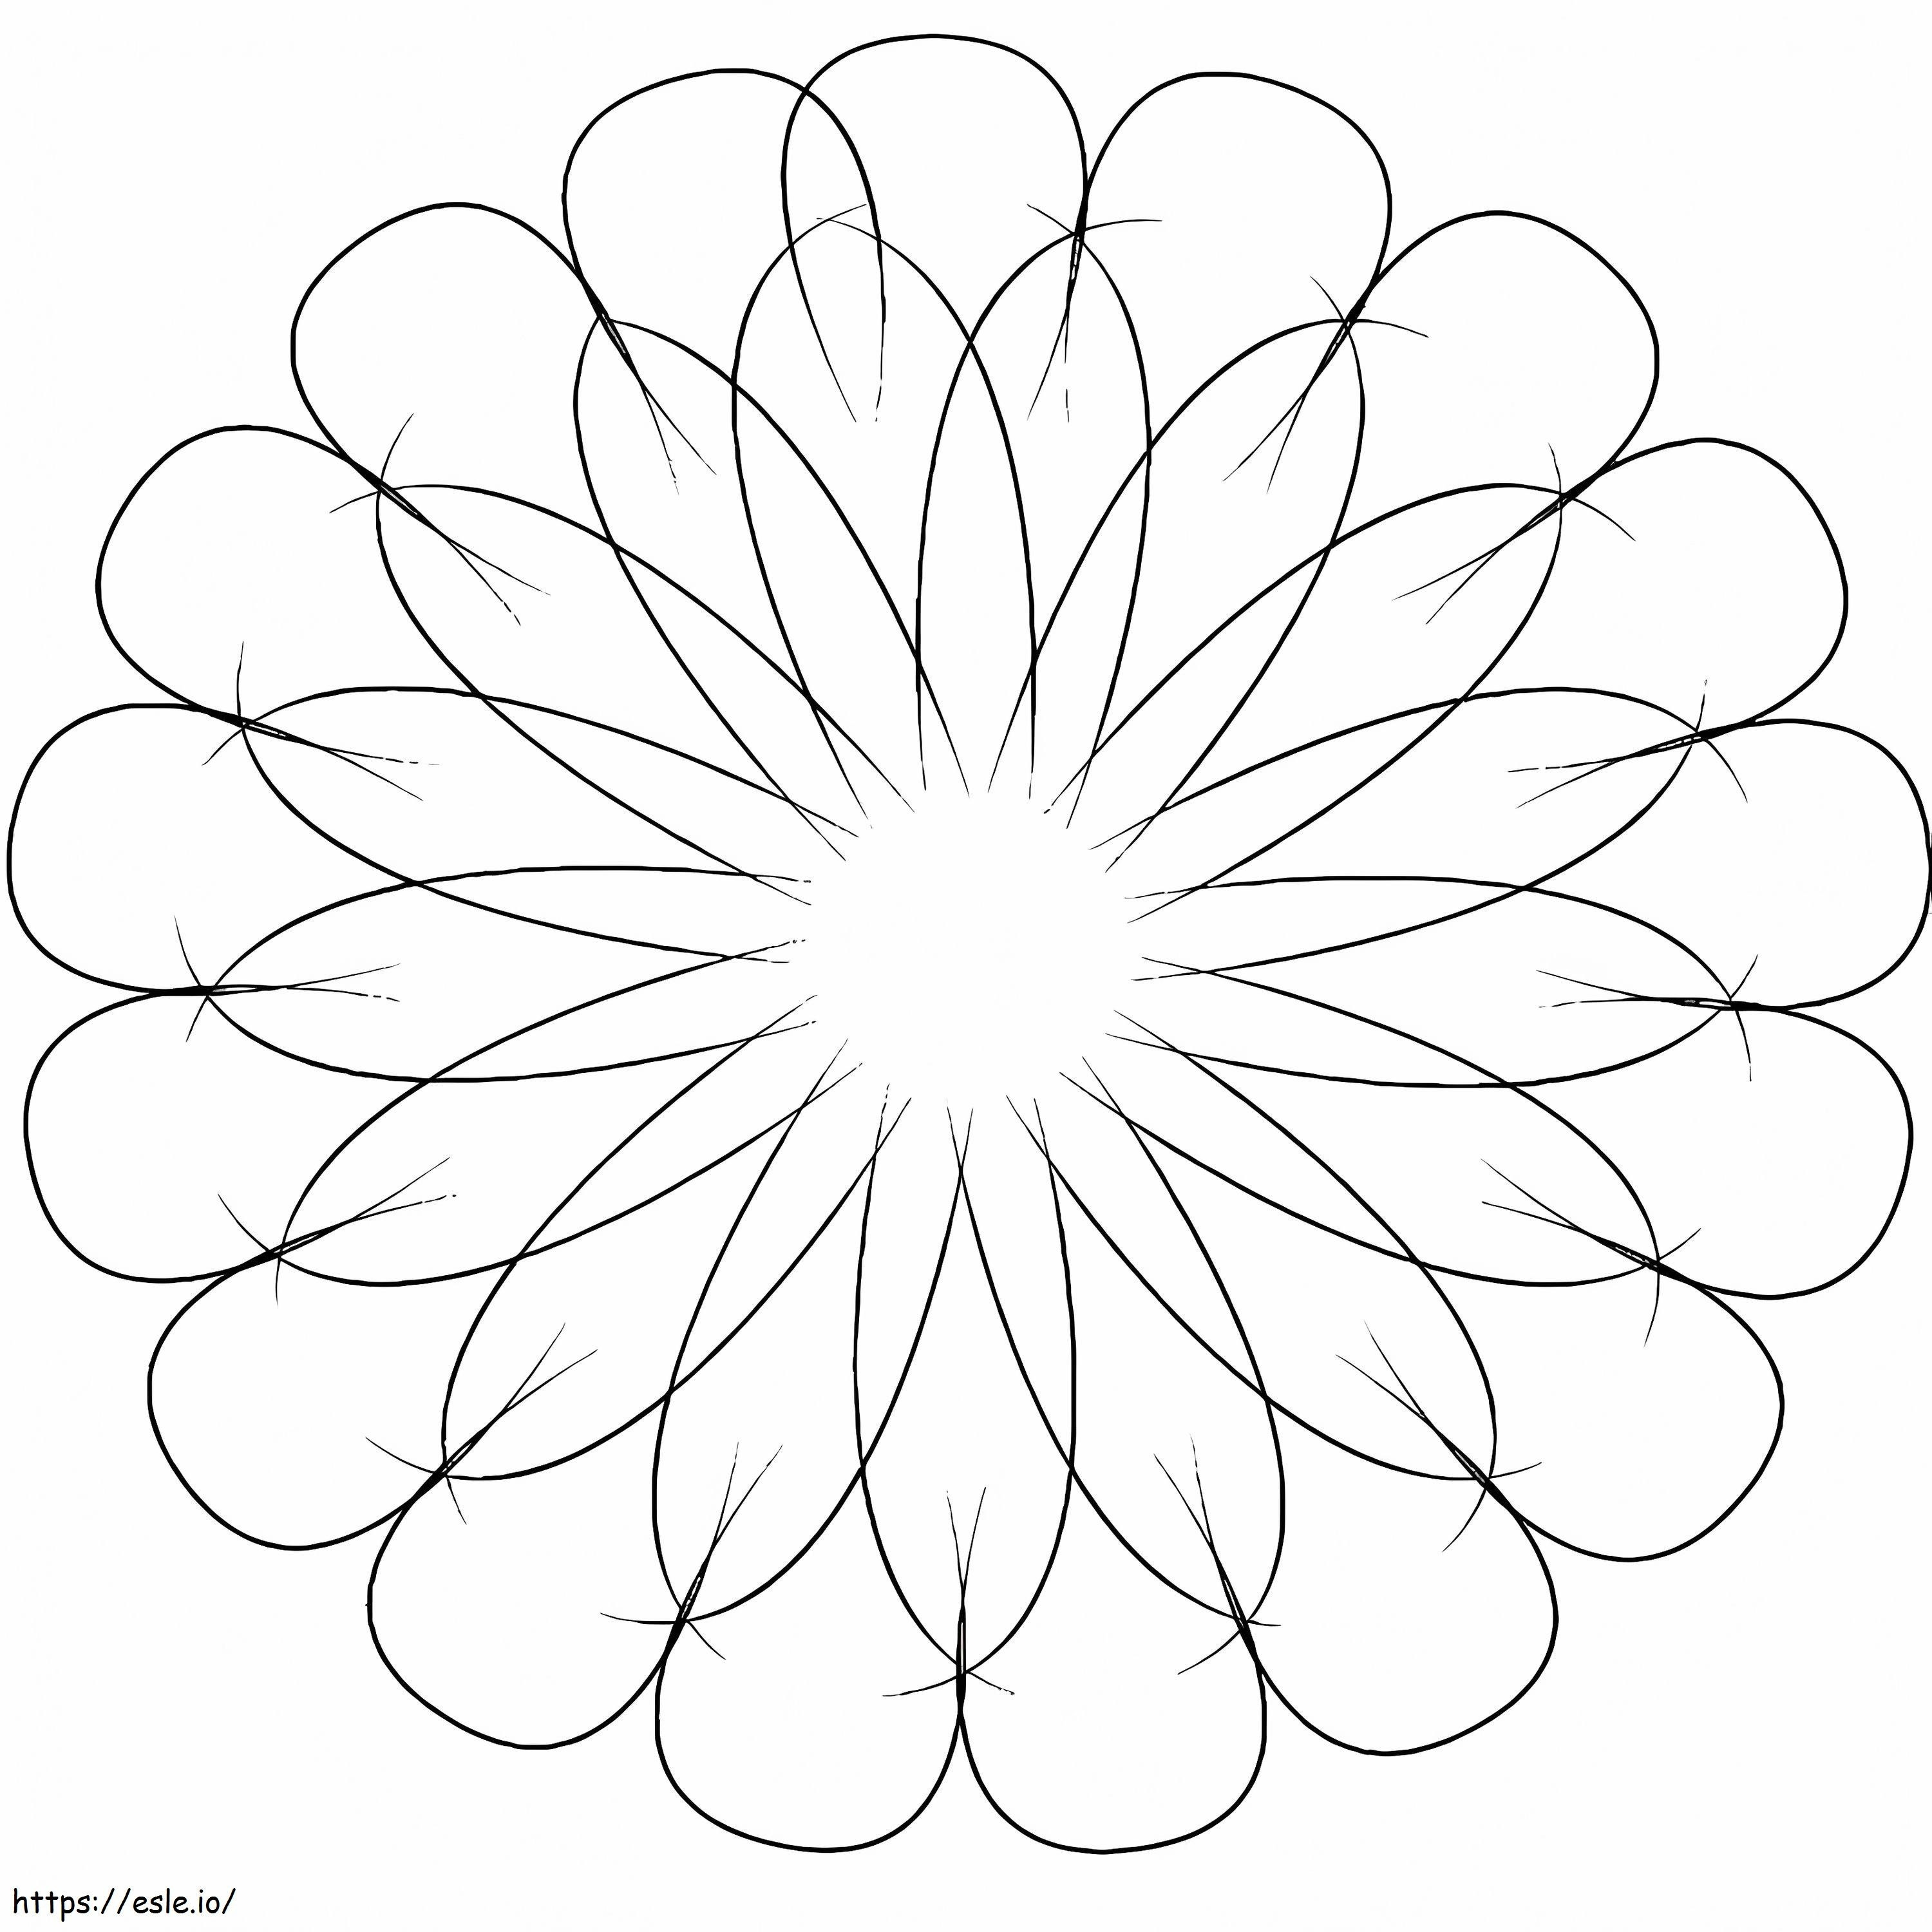 Flower Mandala 11 coloring page